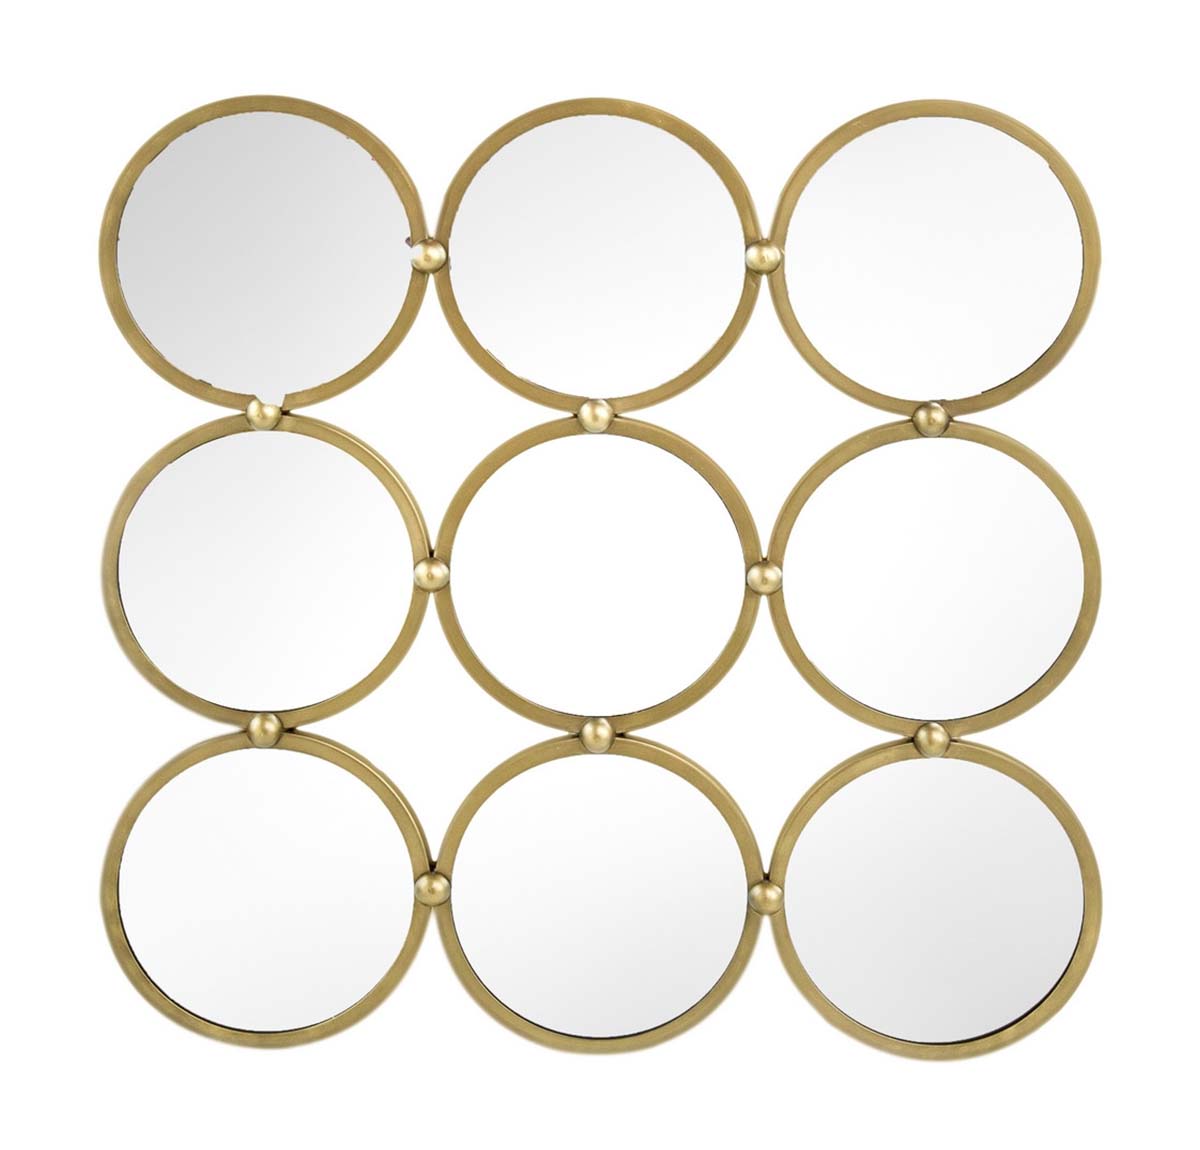 Circles Wall Hanging Metal Mirror - Gold